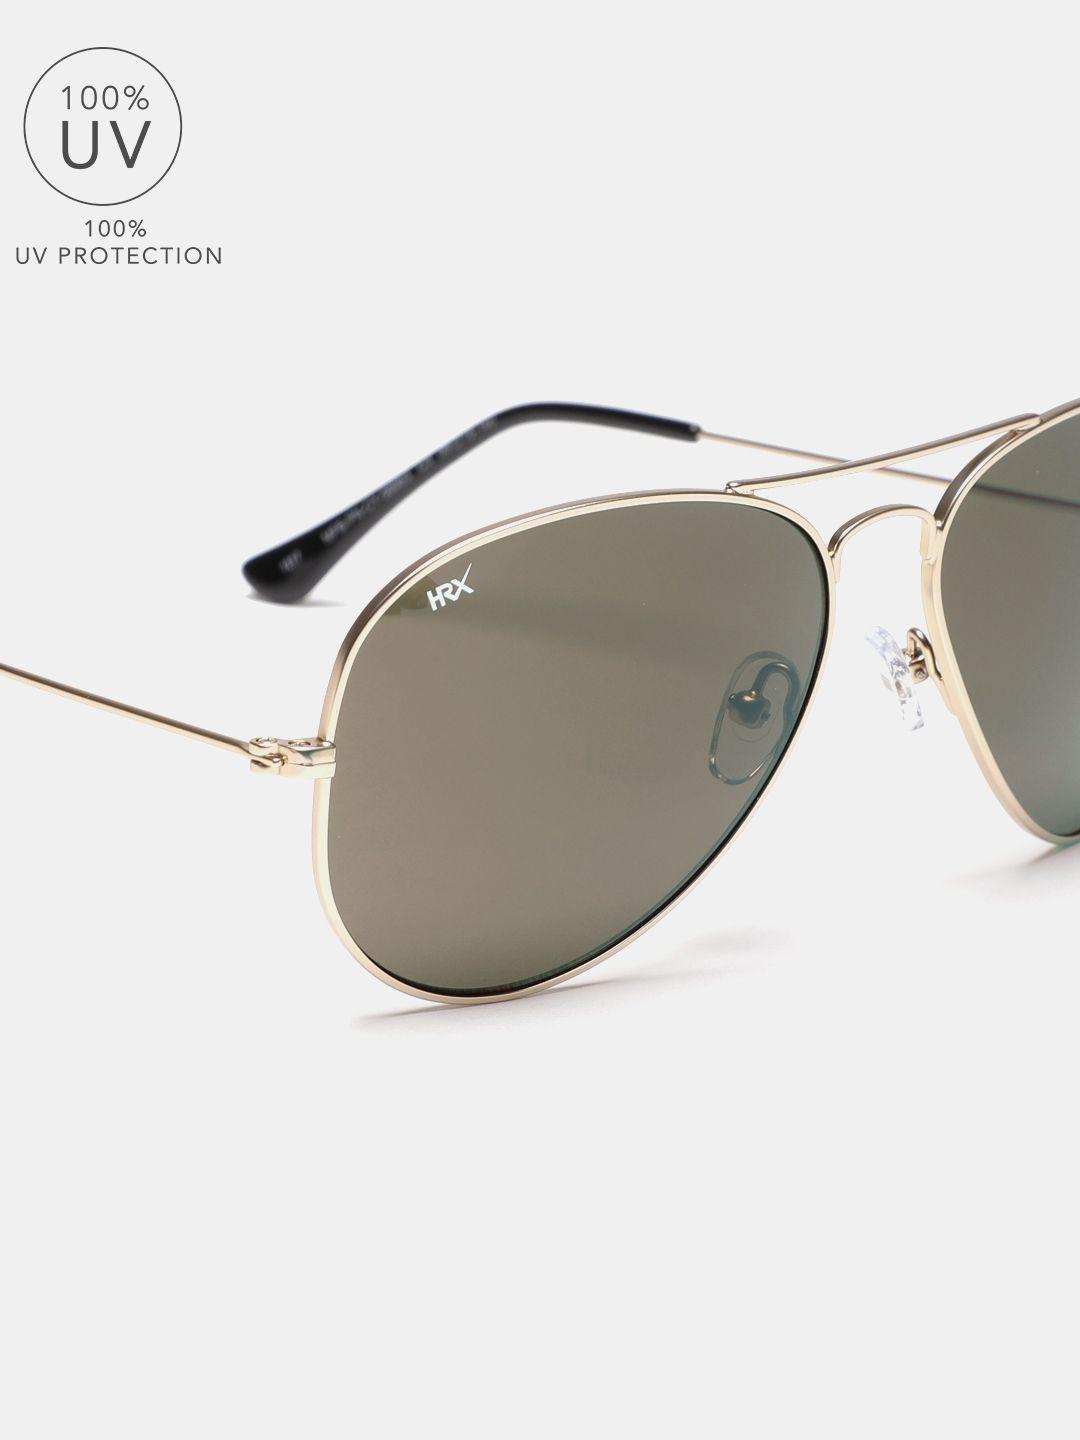 hrx-by-hrithik-roshan-unisex-aviator-sunglasses-mfb-pn-cy-58953-lt.gold/black